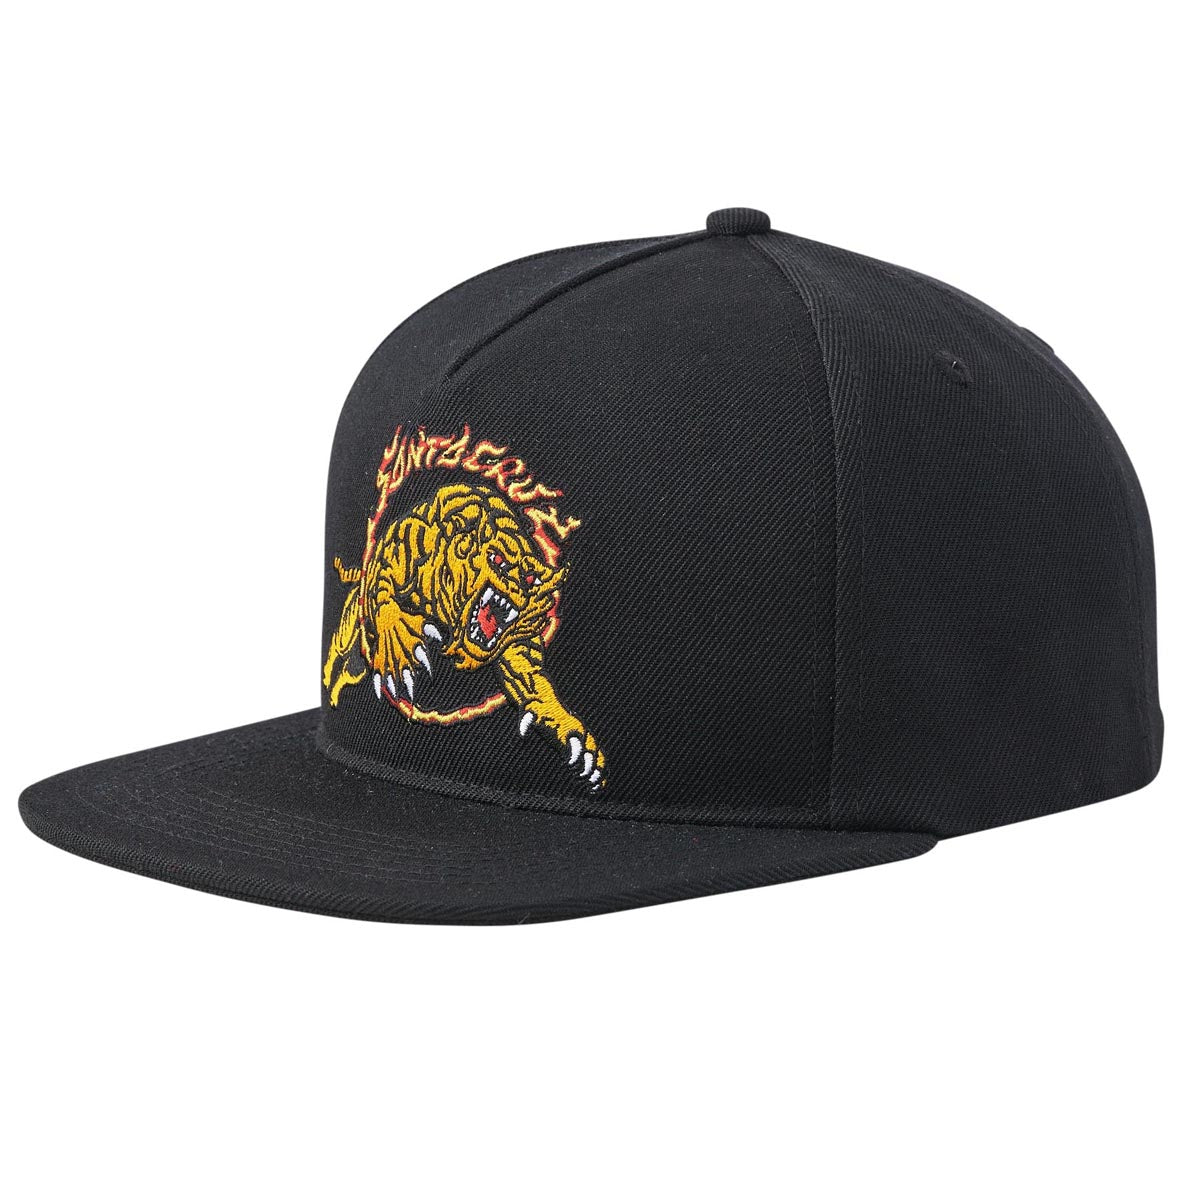 Santa Cruz Salba Tiger Snapback Hat - Black image 1